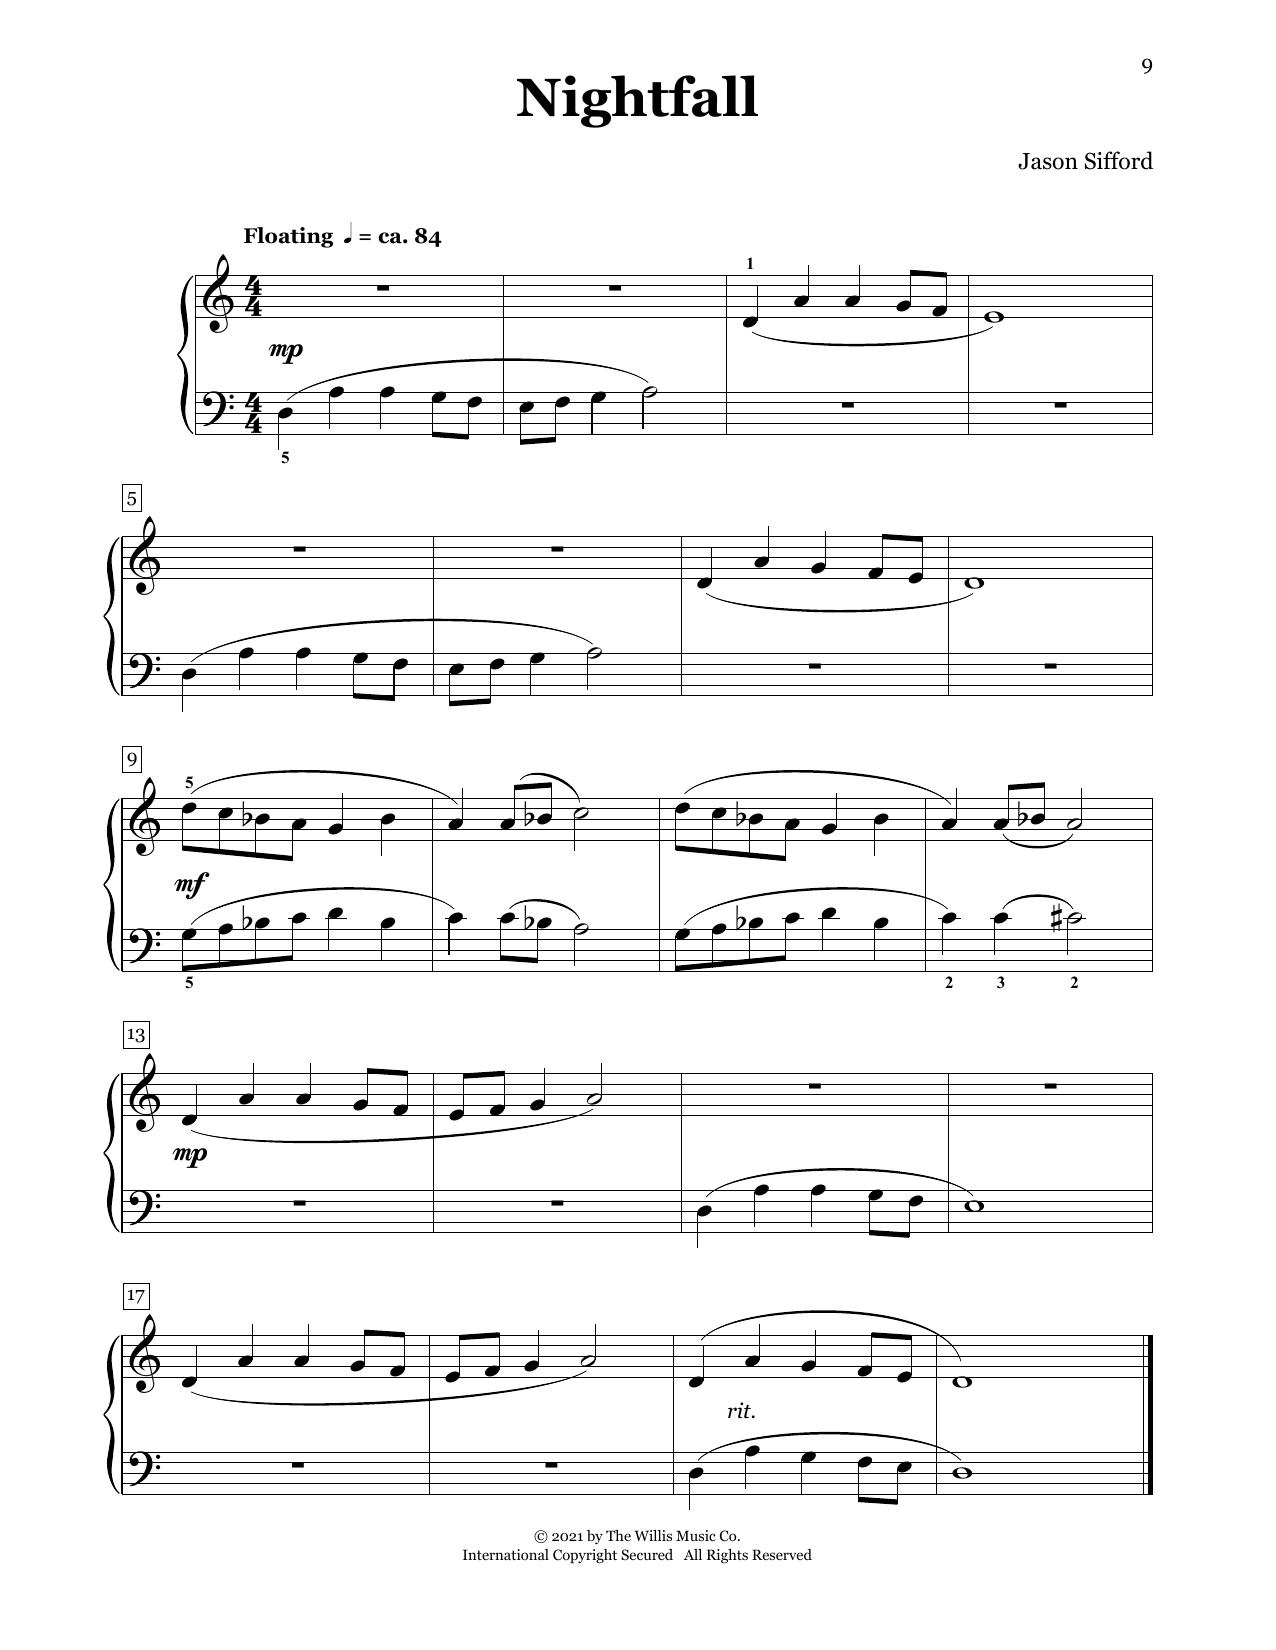 Jason Sifford Nightfall Sheet Music Notes & Chords for Piano Duet - Download or Print PDF